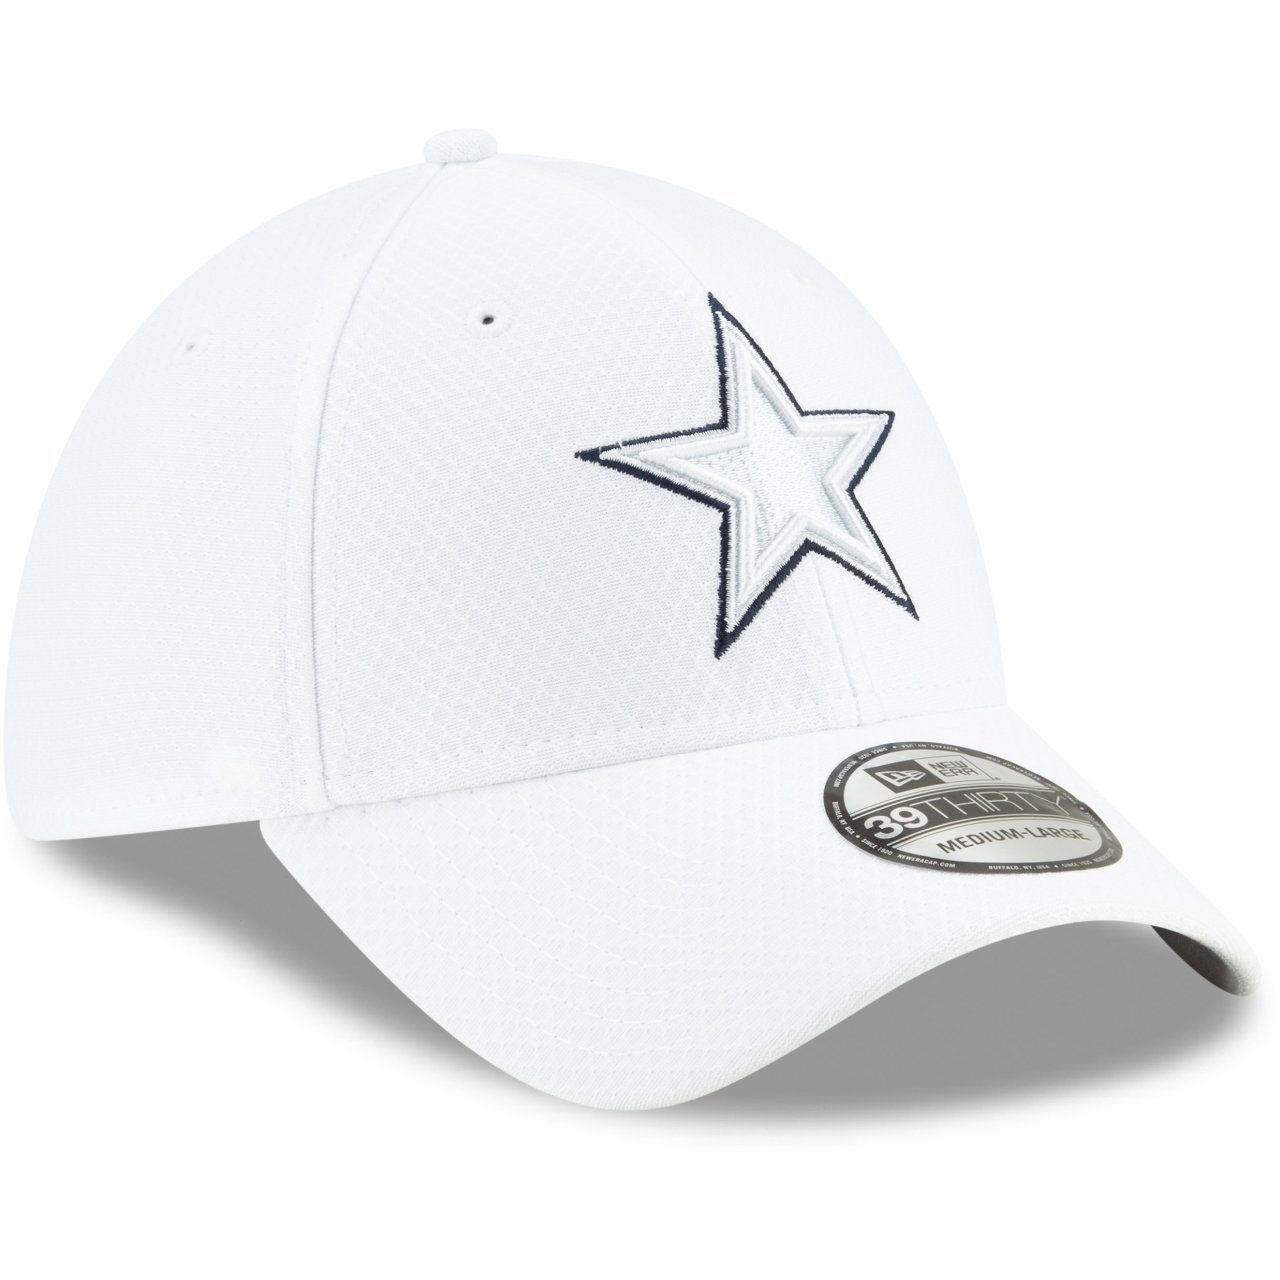 New Era Flex Cap 39Thirty Cowboys NFL Sideline Dallas StretchFit PLATINUM